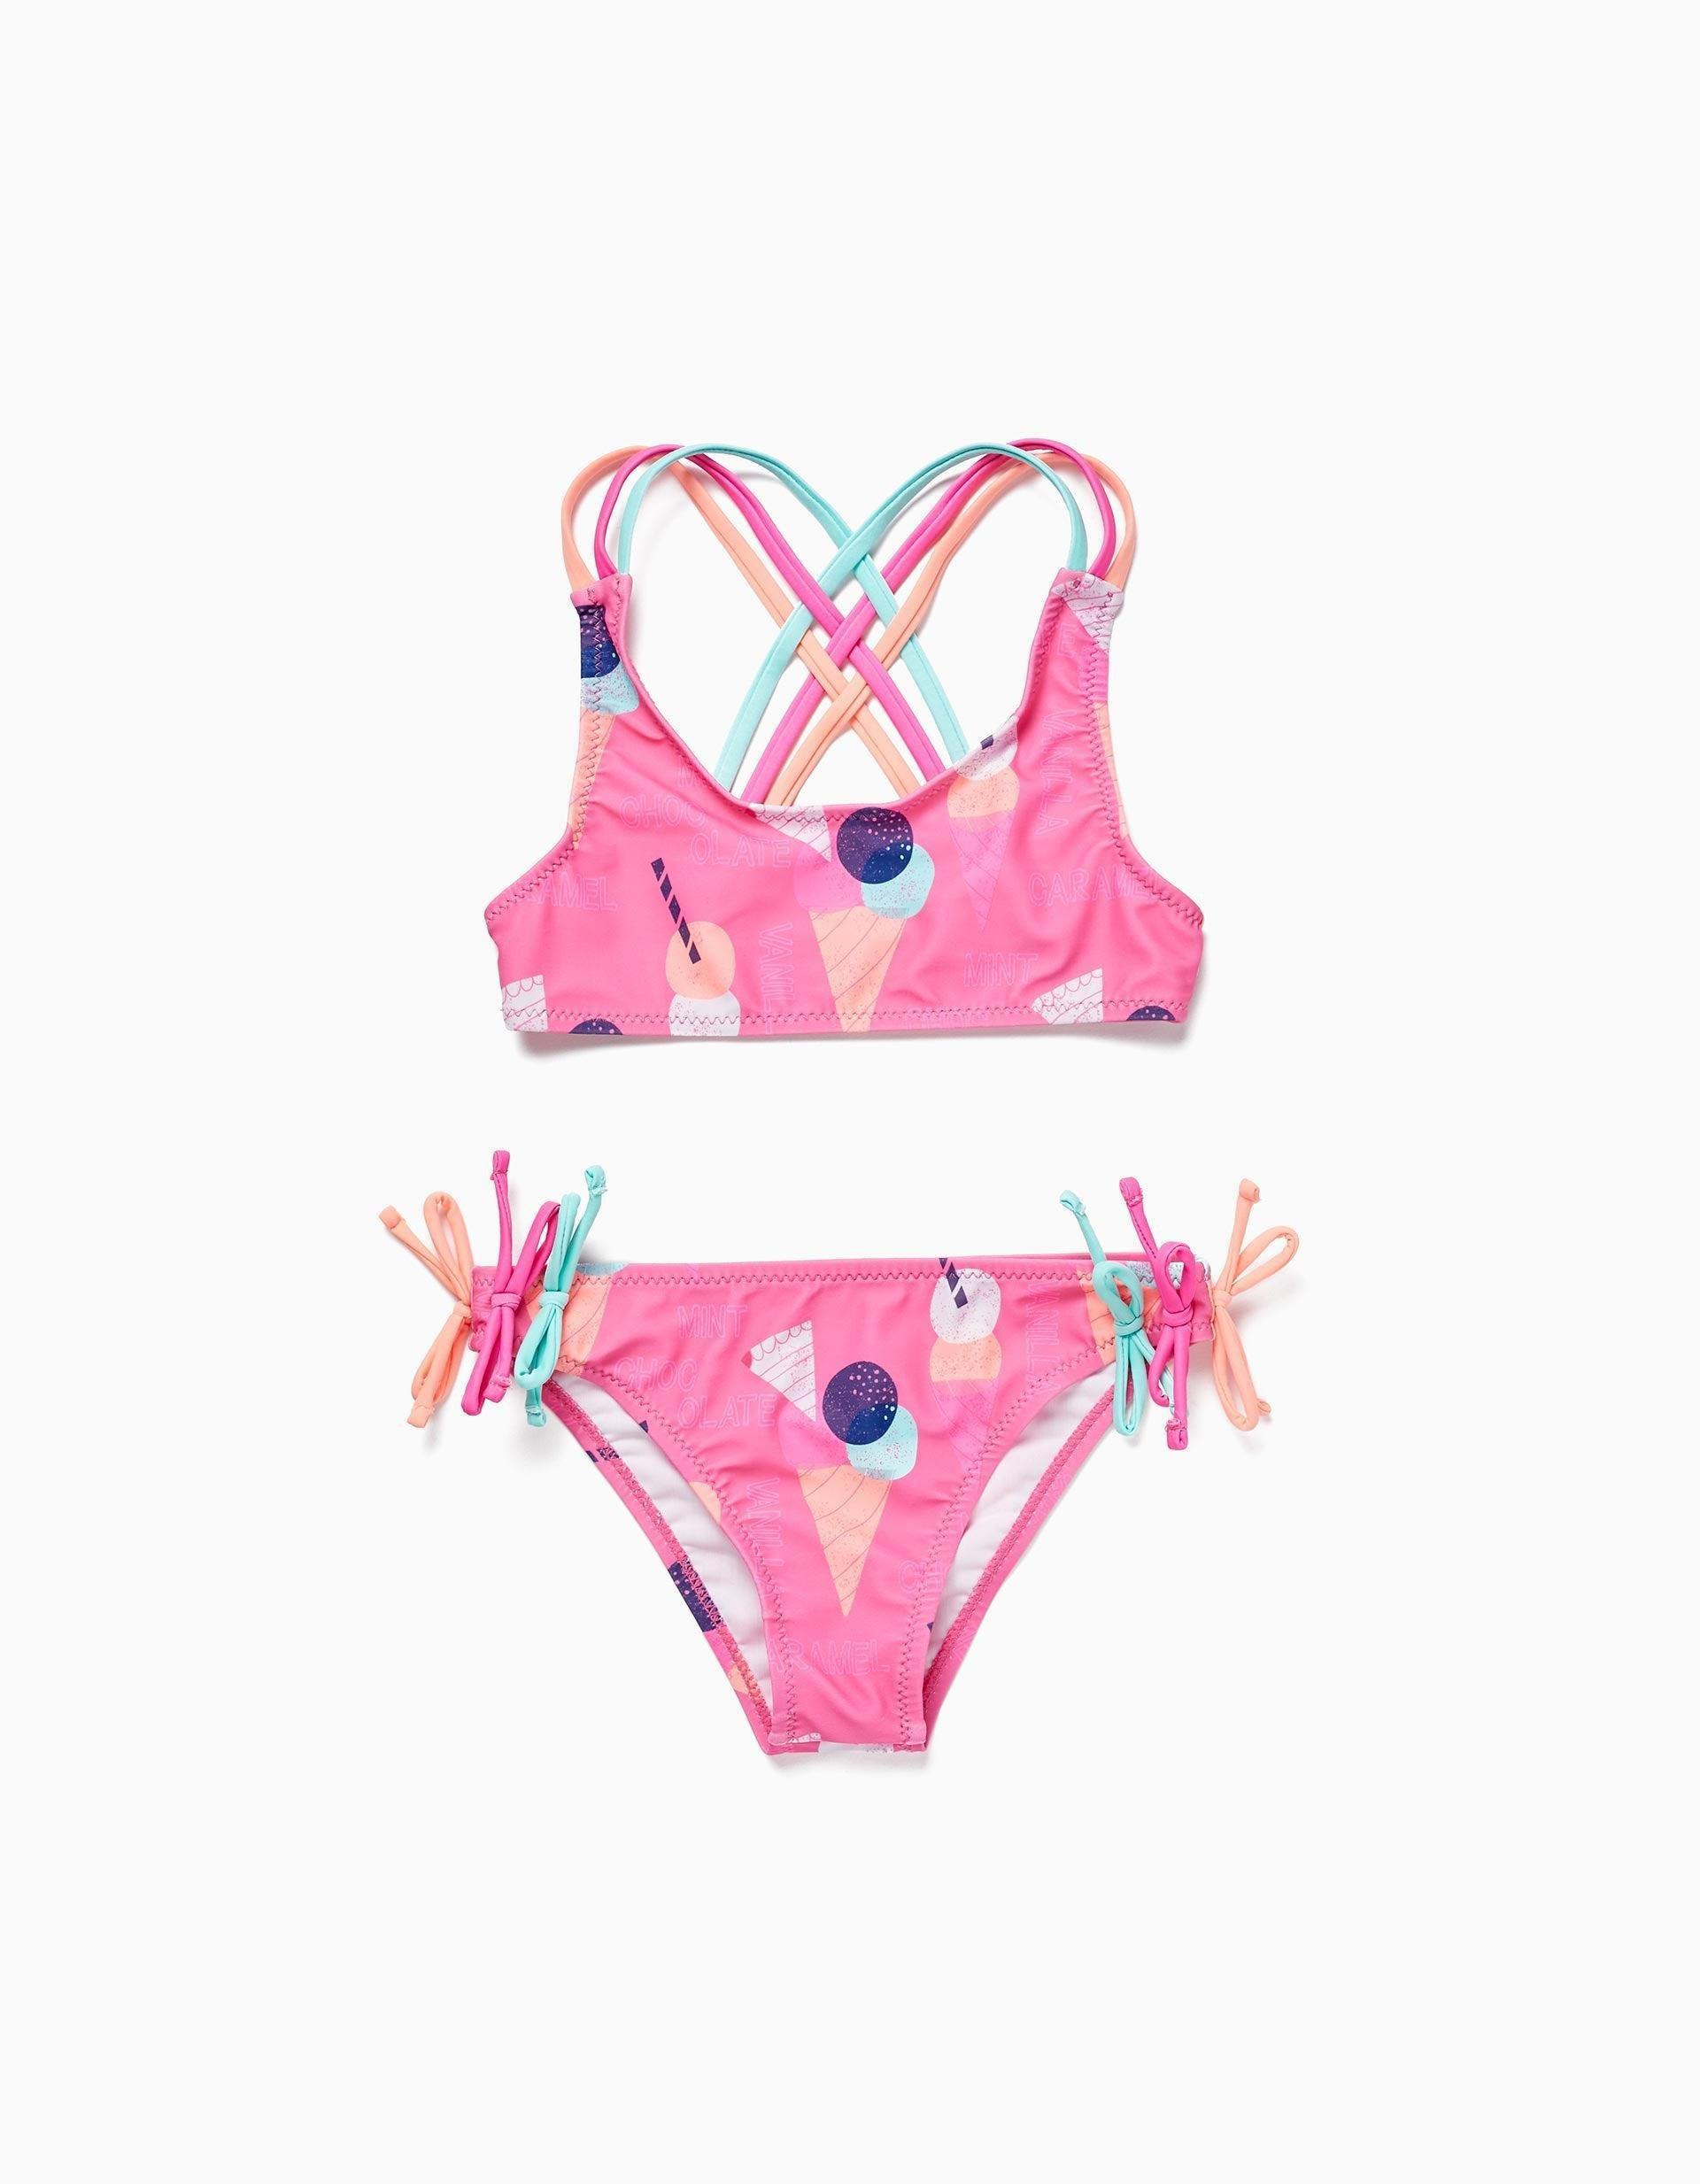 Zippy - Pink Printed Swimsuit, Kids Girls